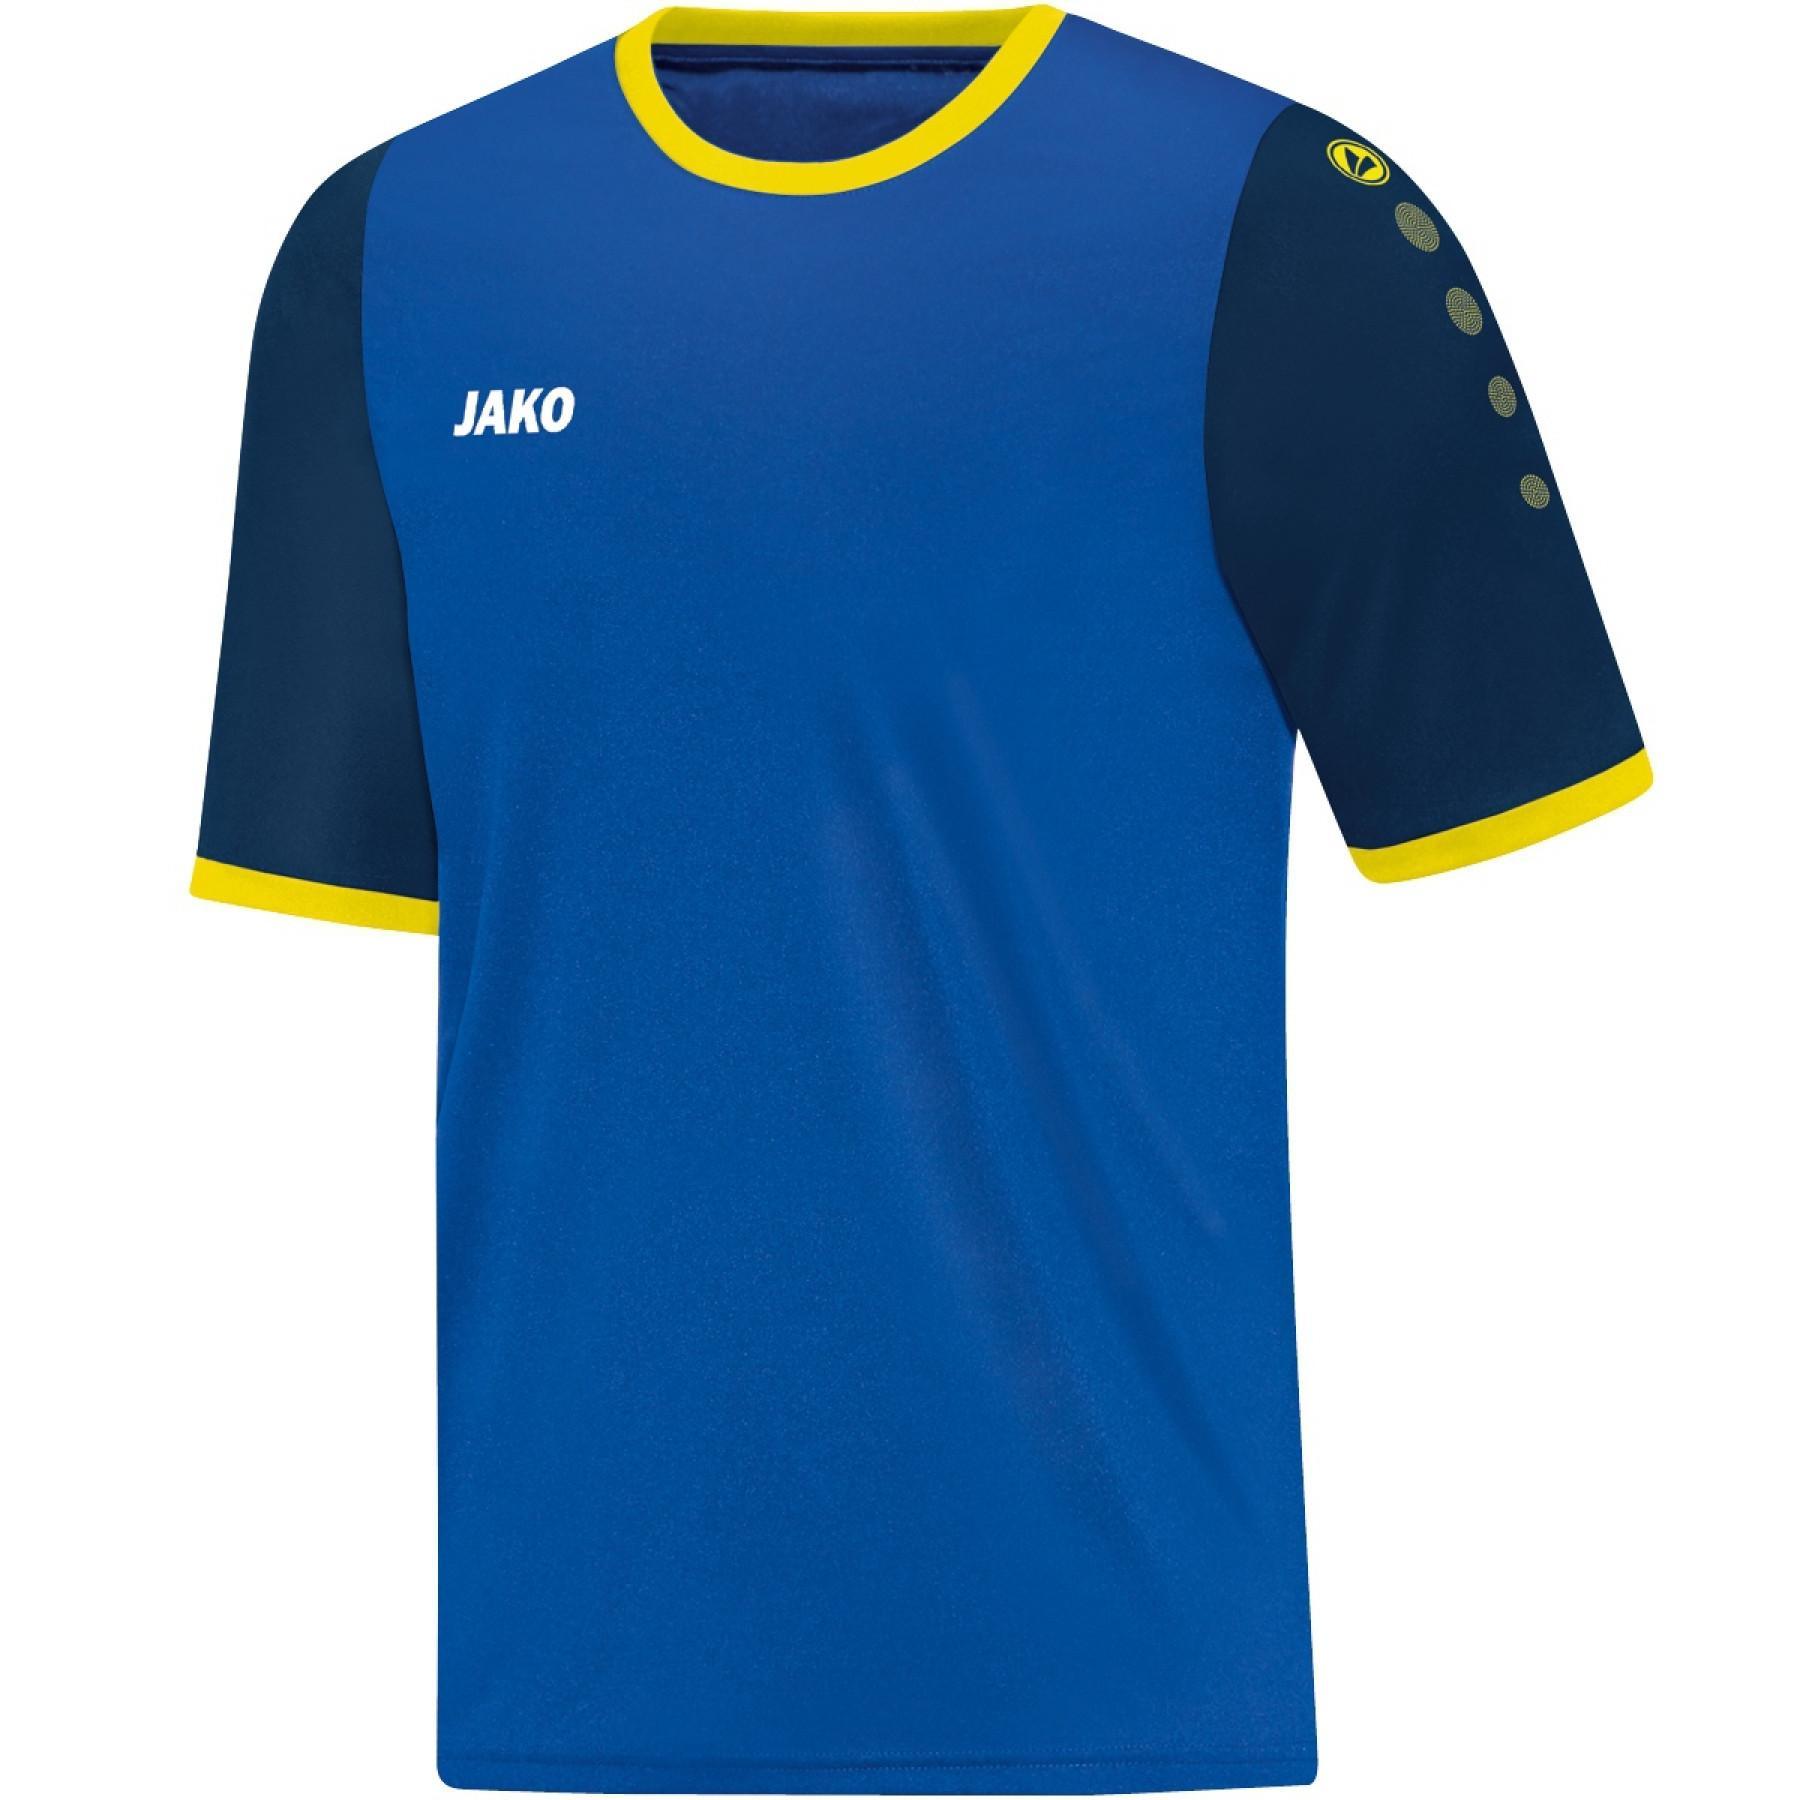 Jersey Jako Leeds - Shirts - Textile - Handball wear